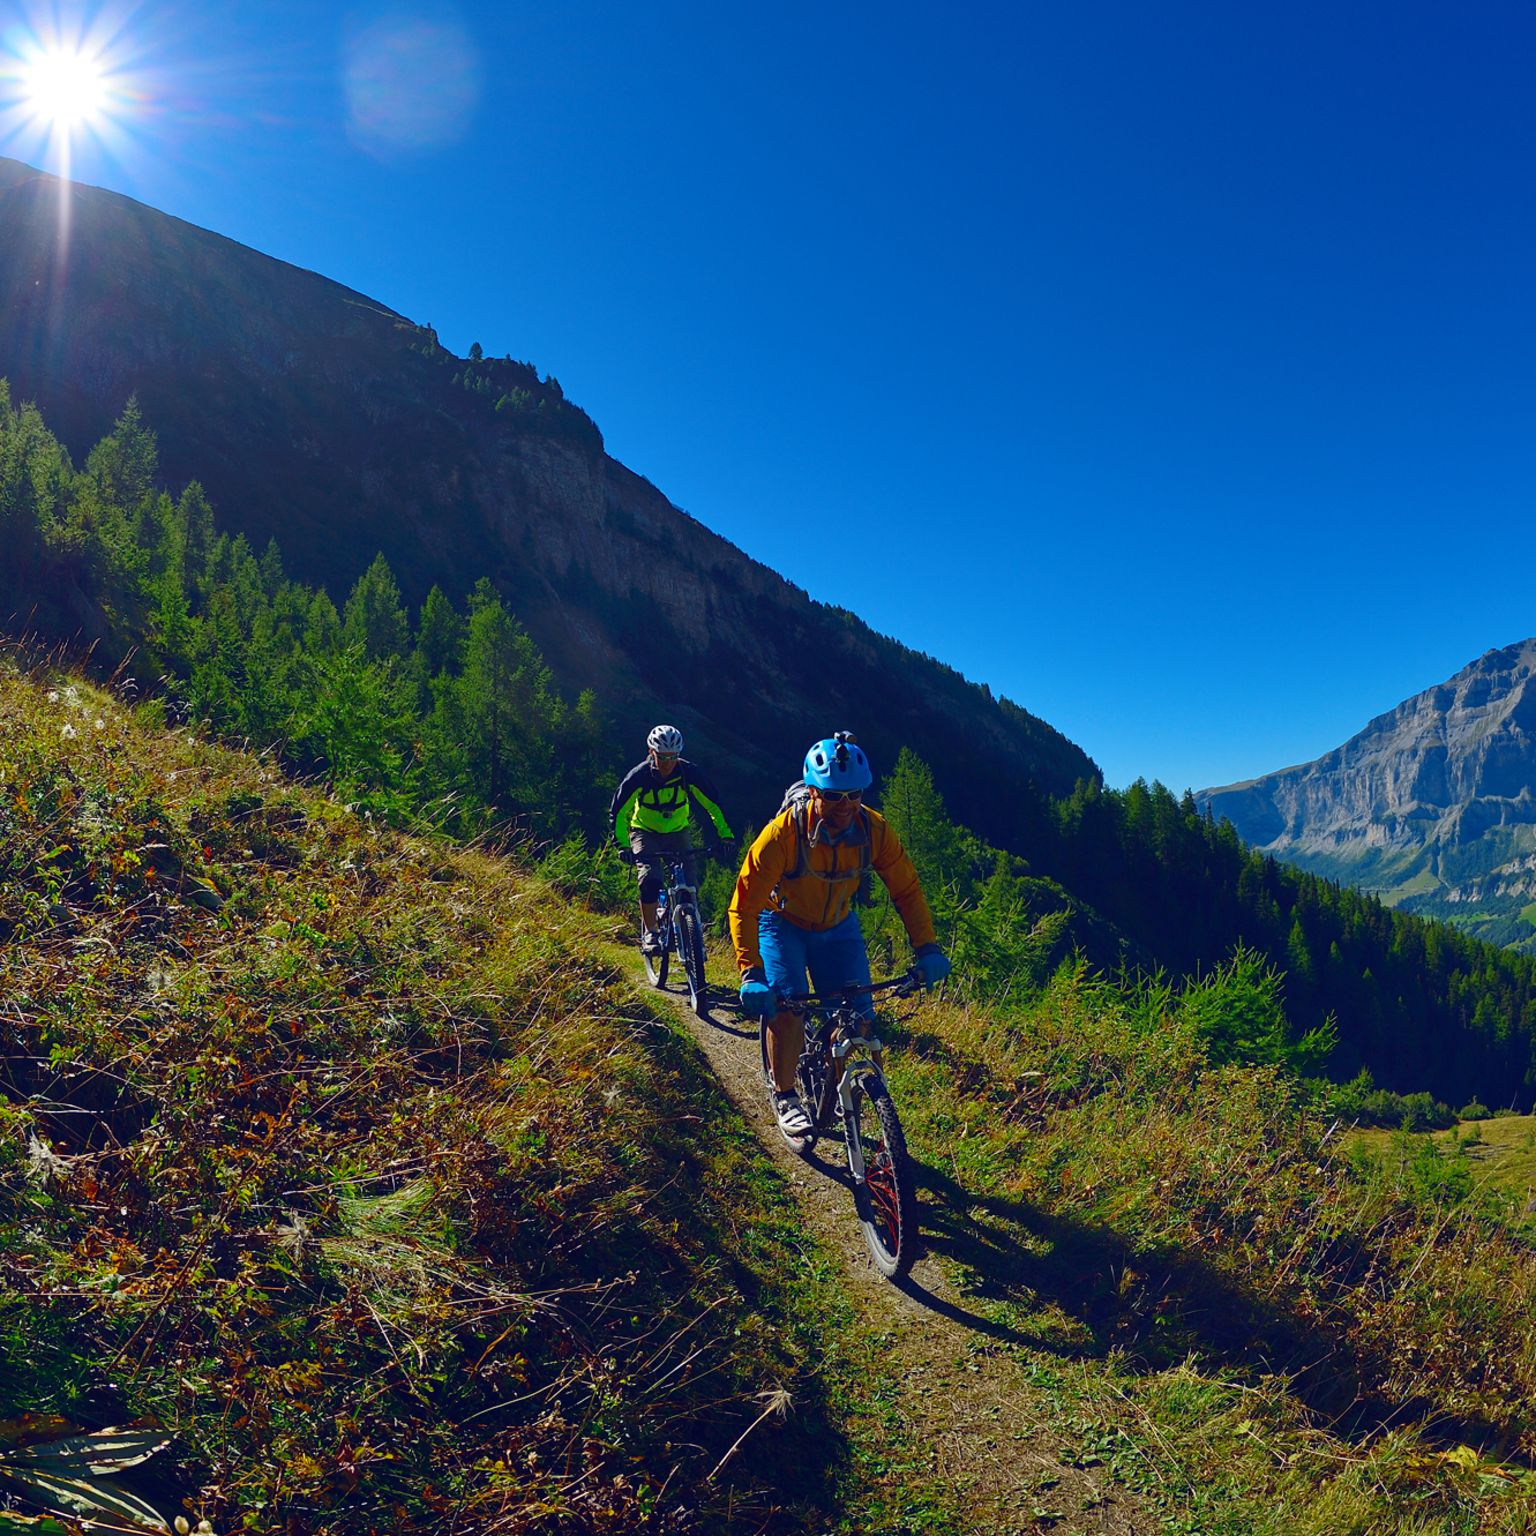 Mountainbiker in the region of Leukerbad during summer, Valais